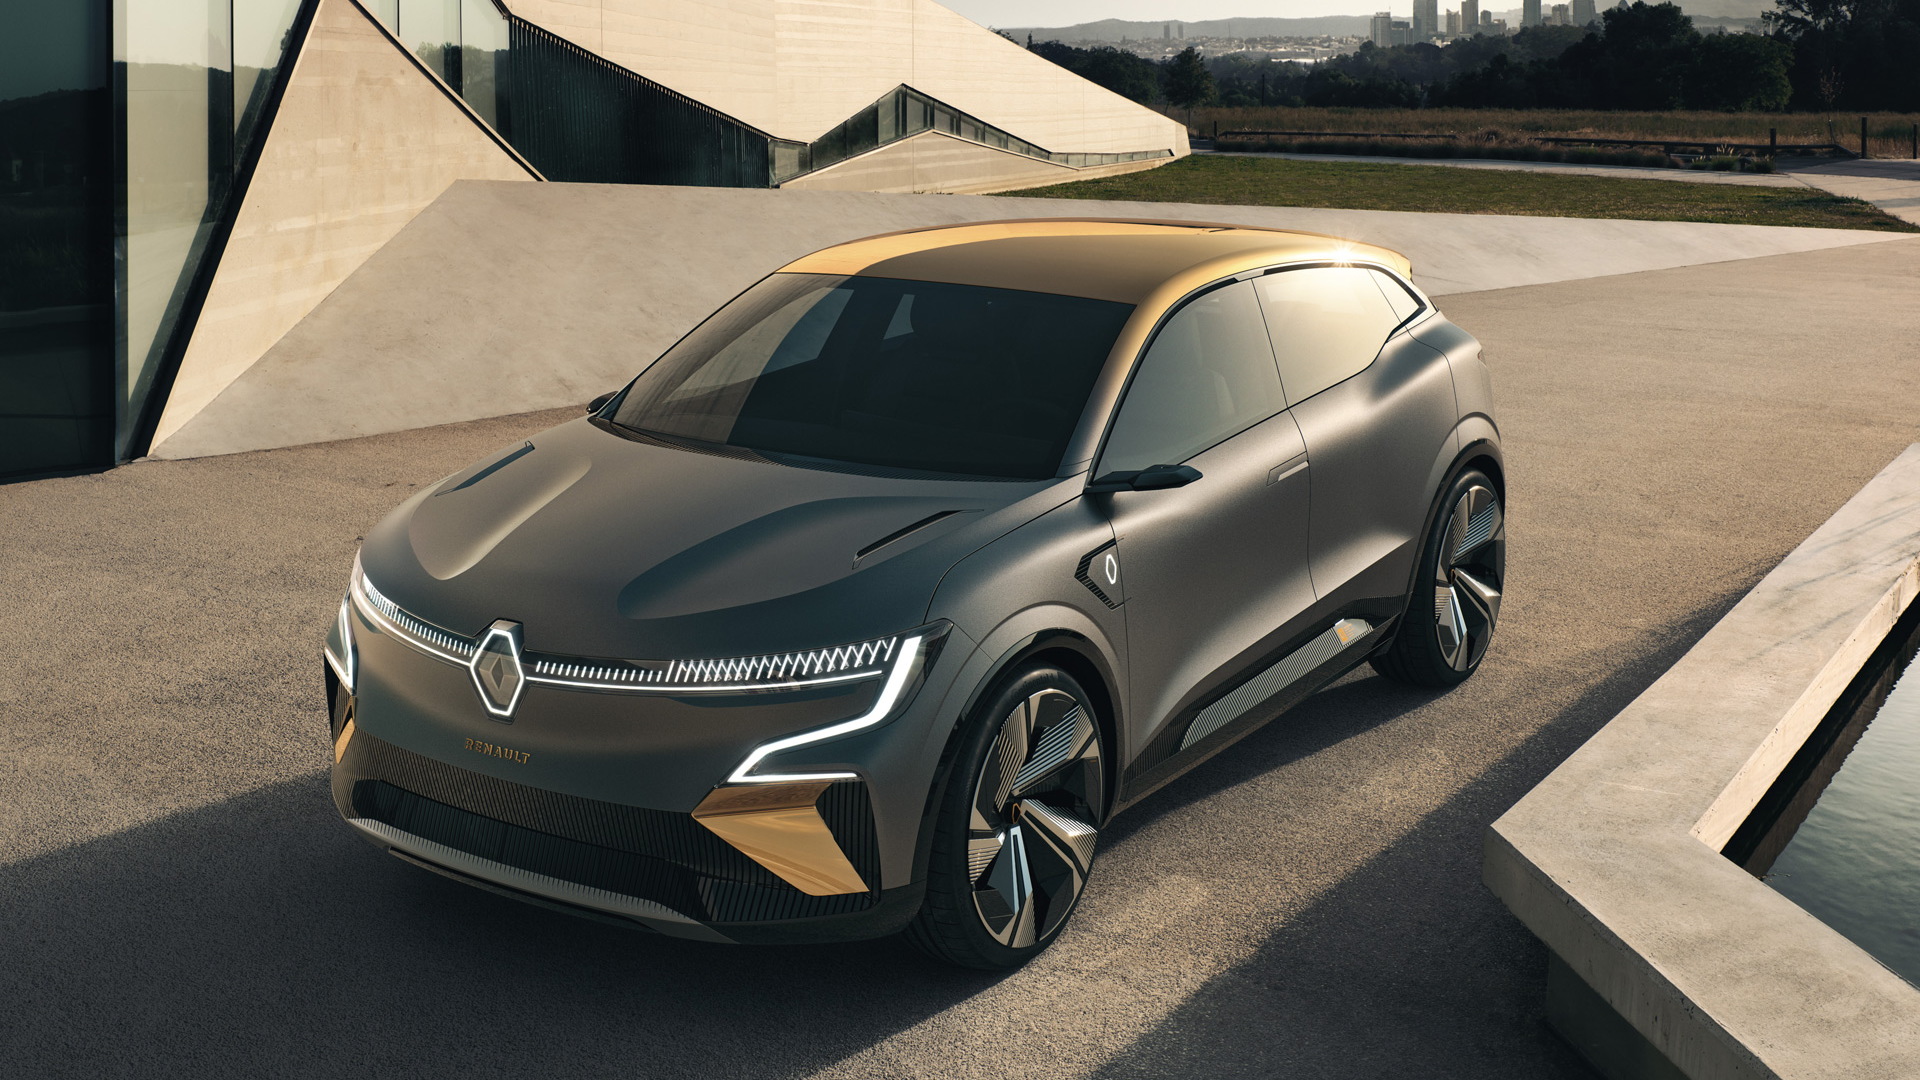 Renault Megane eVision concept